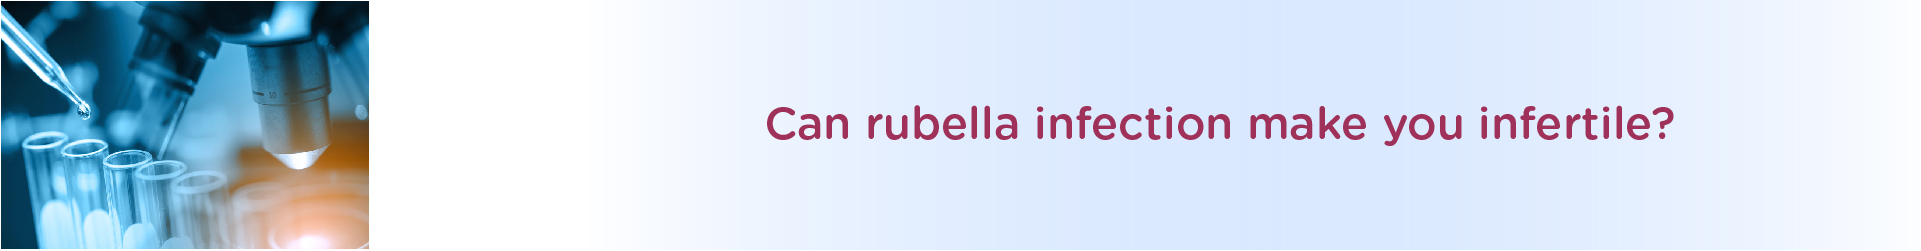 Can Rubella Infection Make You Infertile?